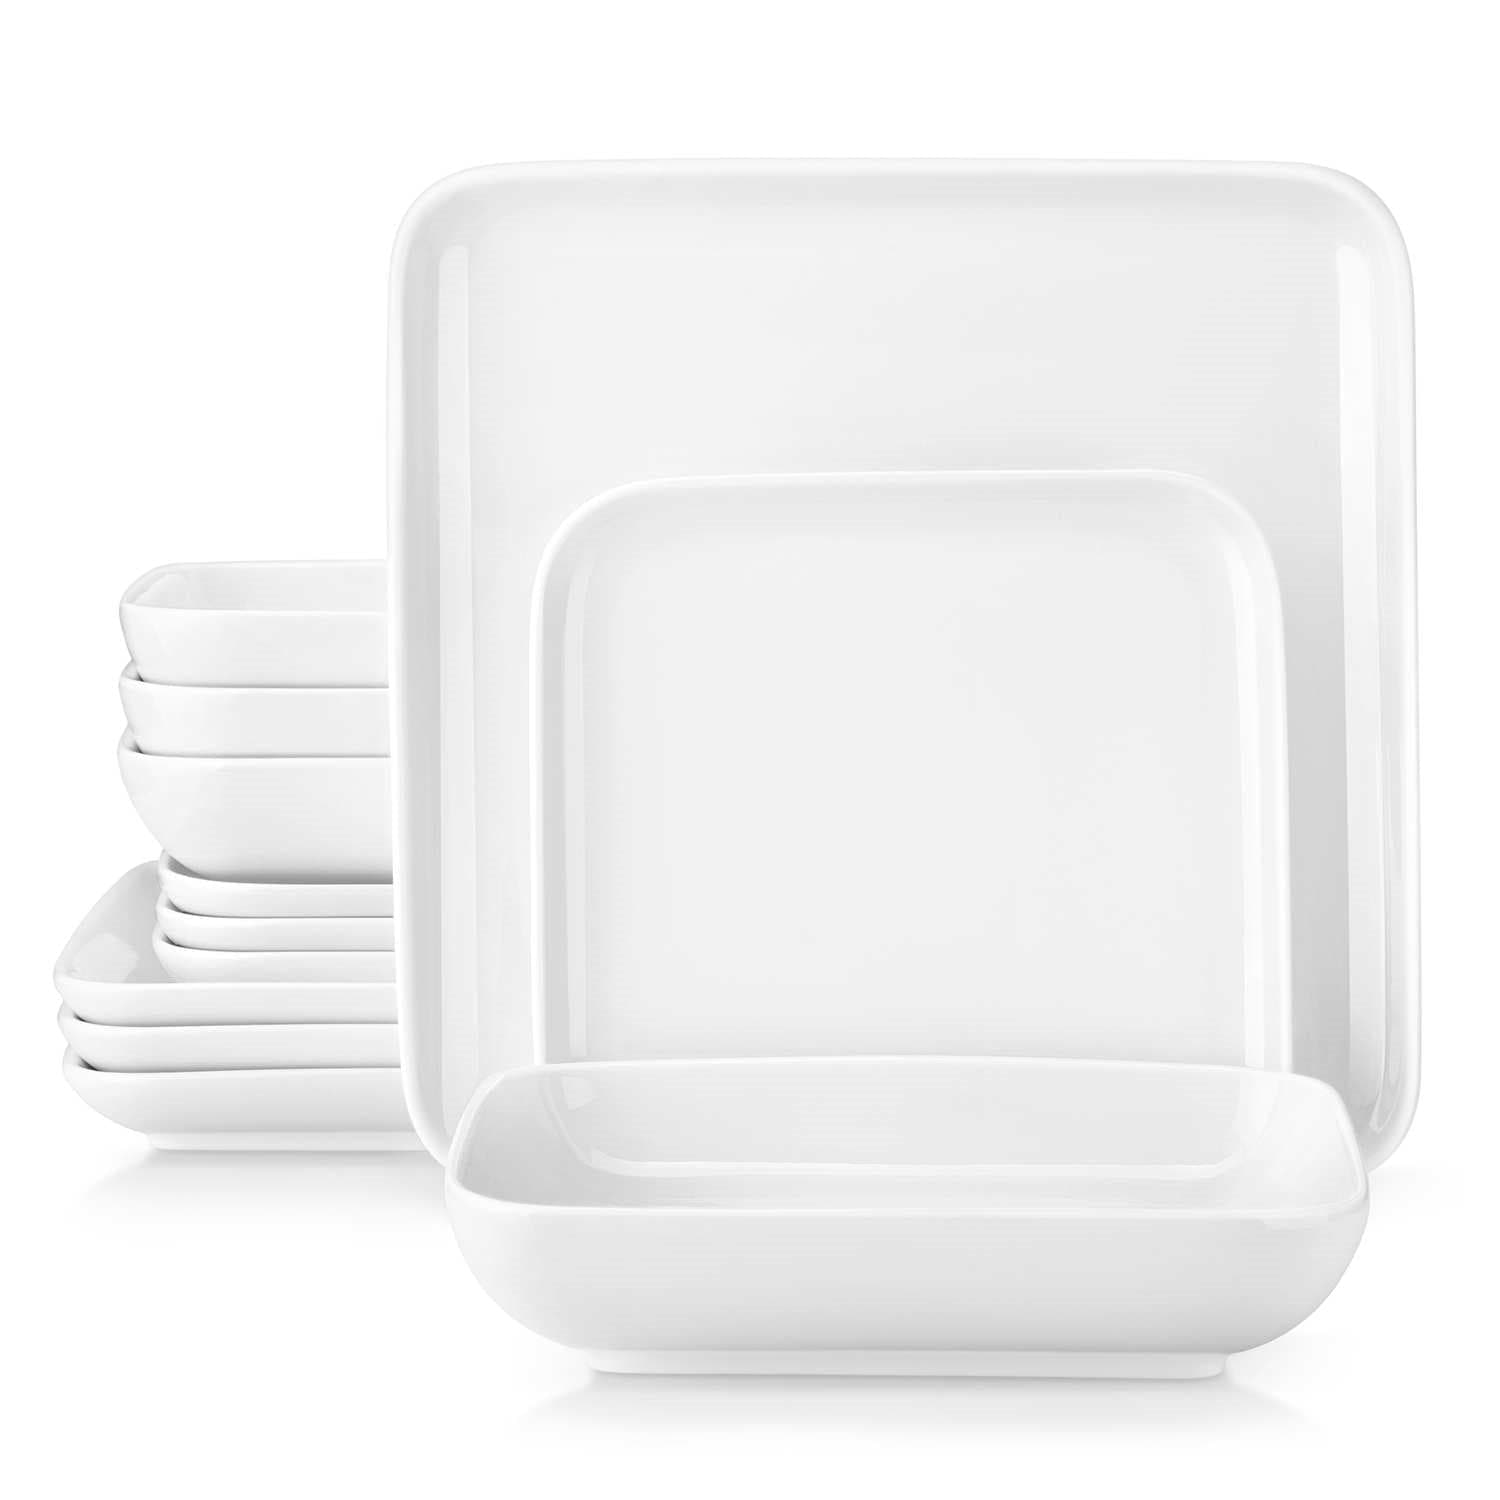 MALACASA 12-Piece White Porcelain Dinnerware at